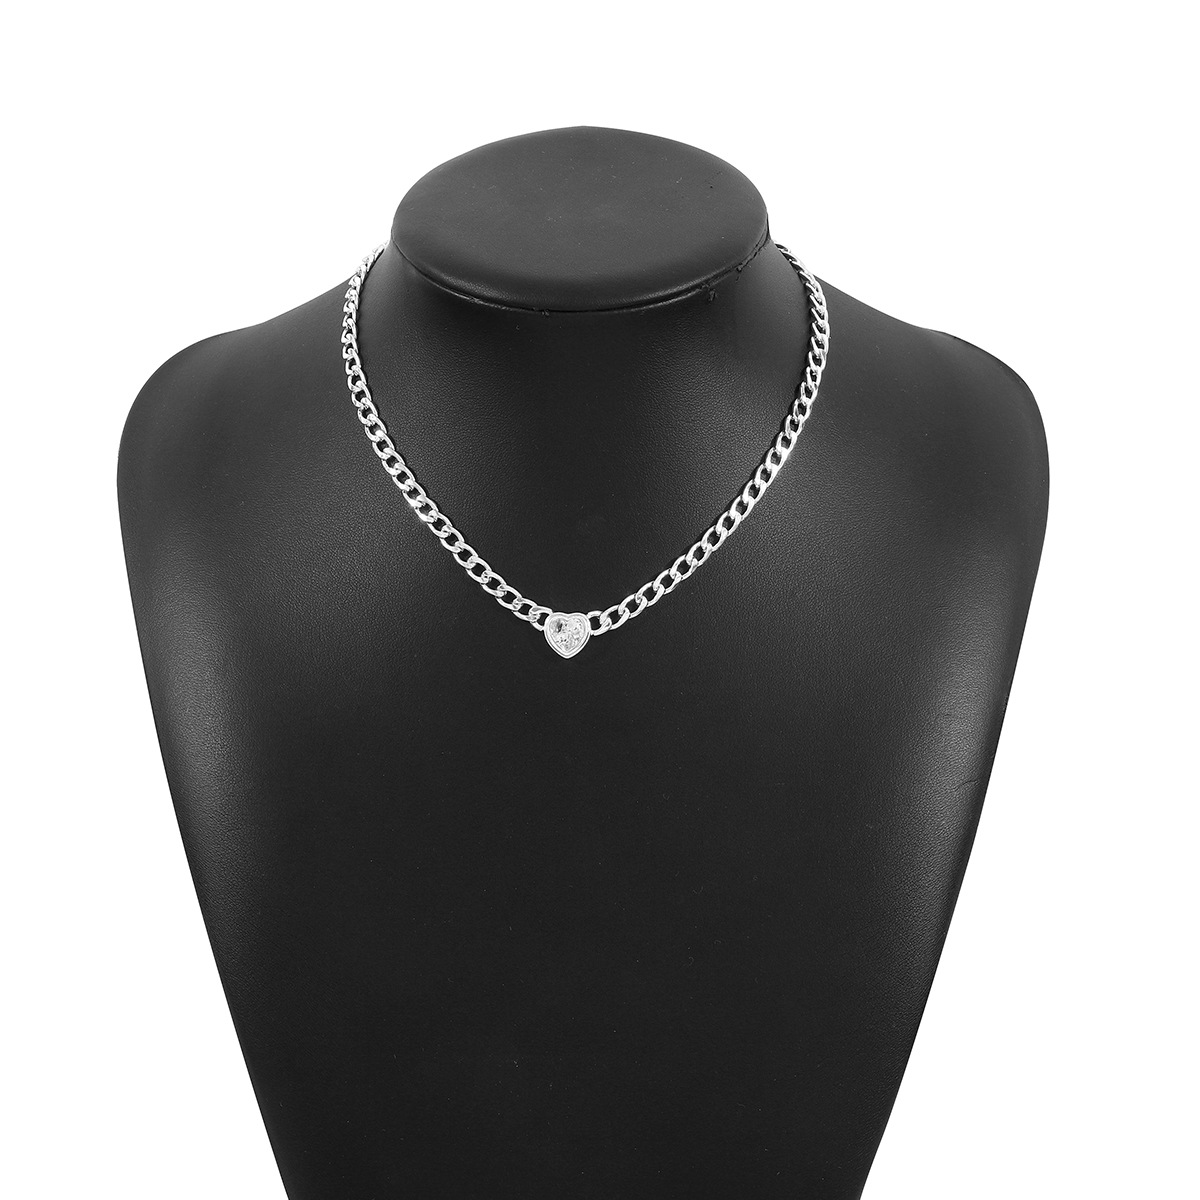 4:White K necklace